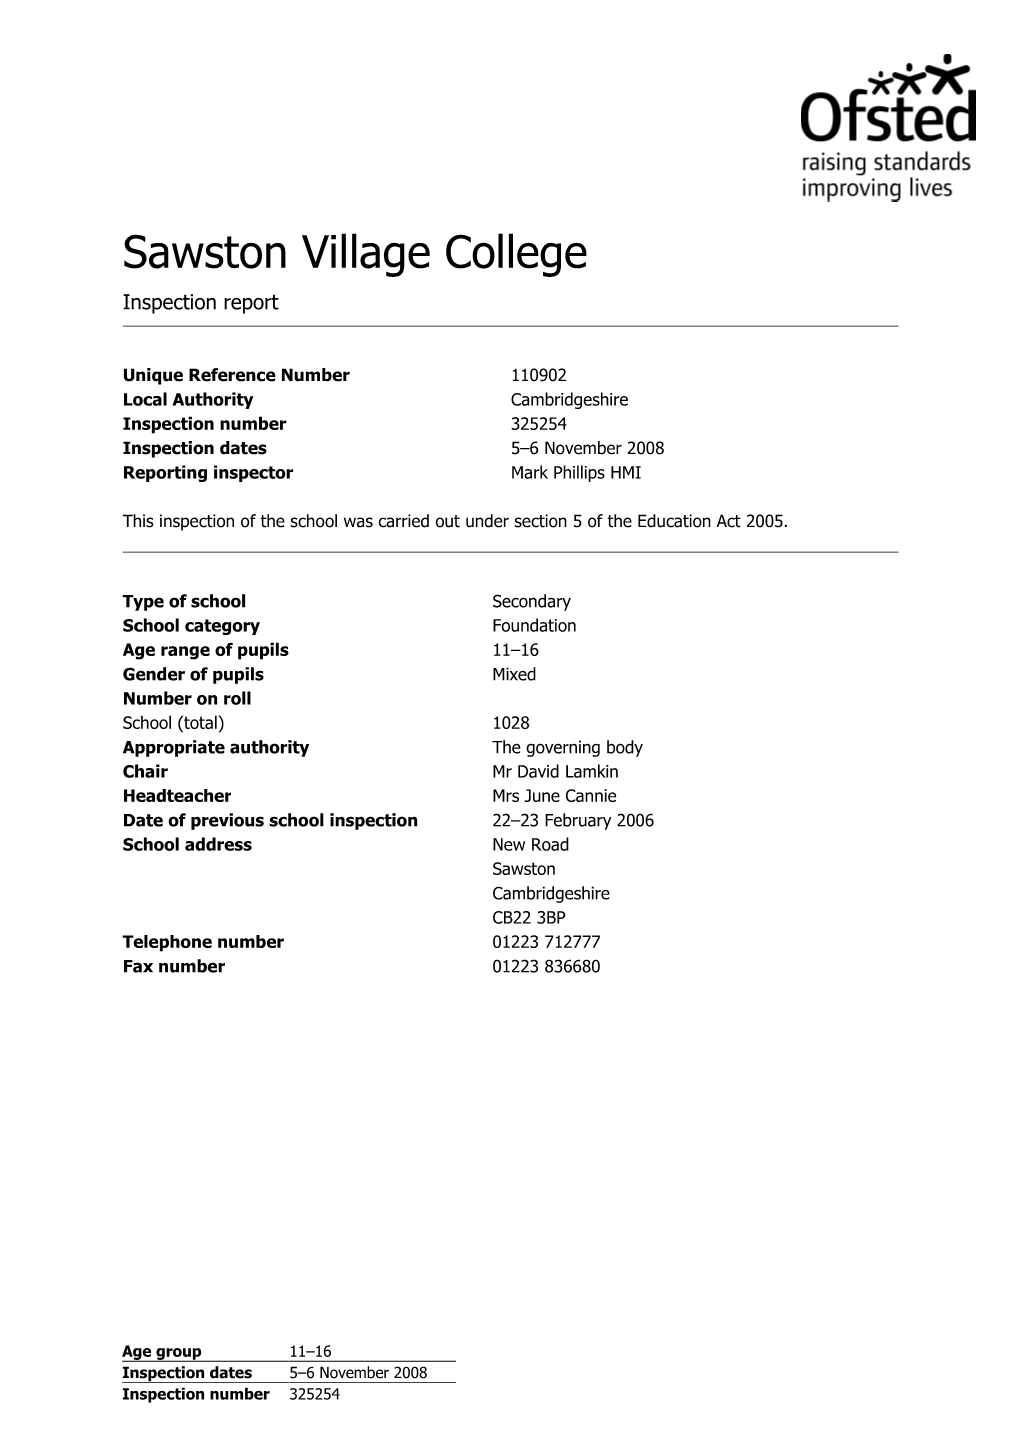 Sawston Village College Inspection Report